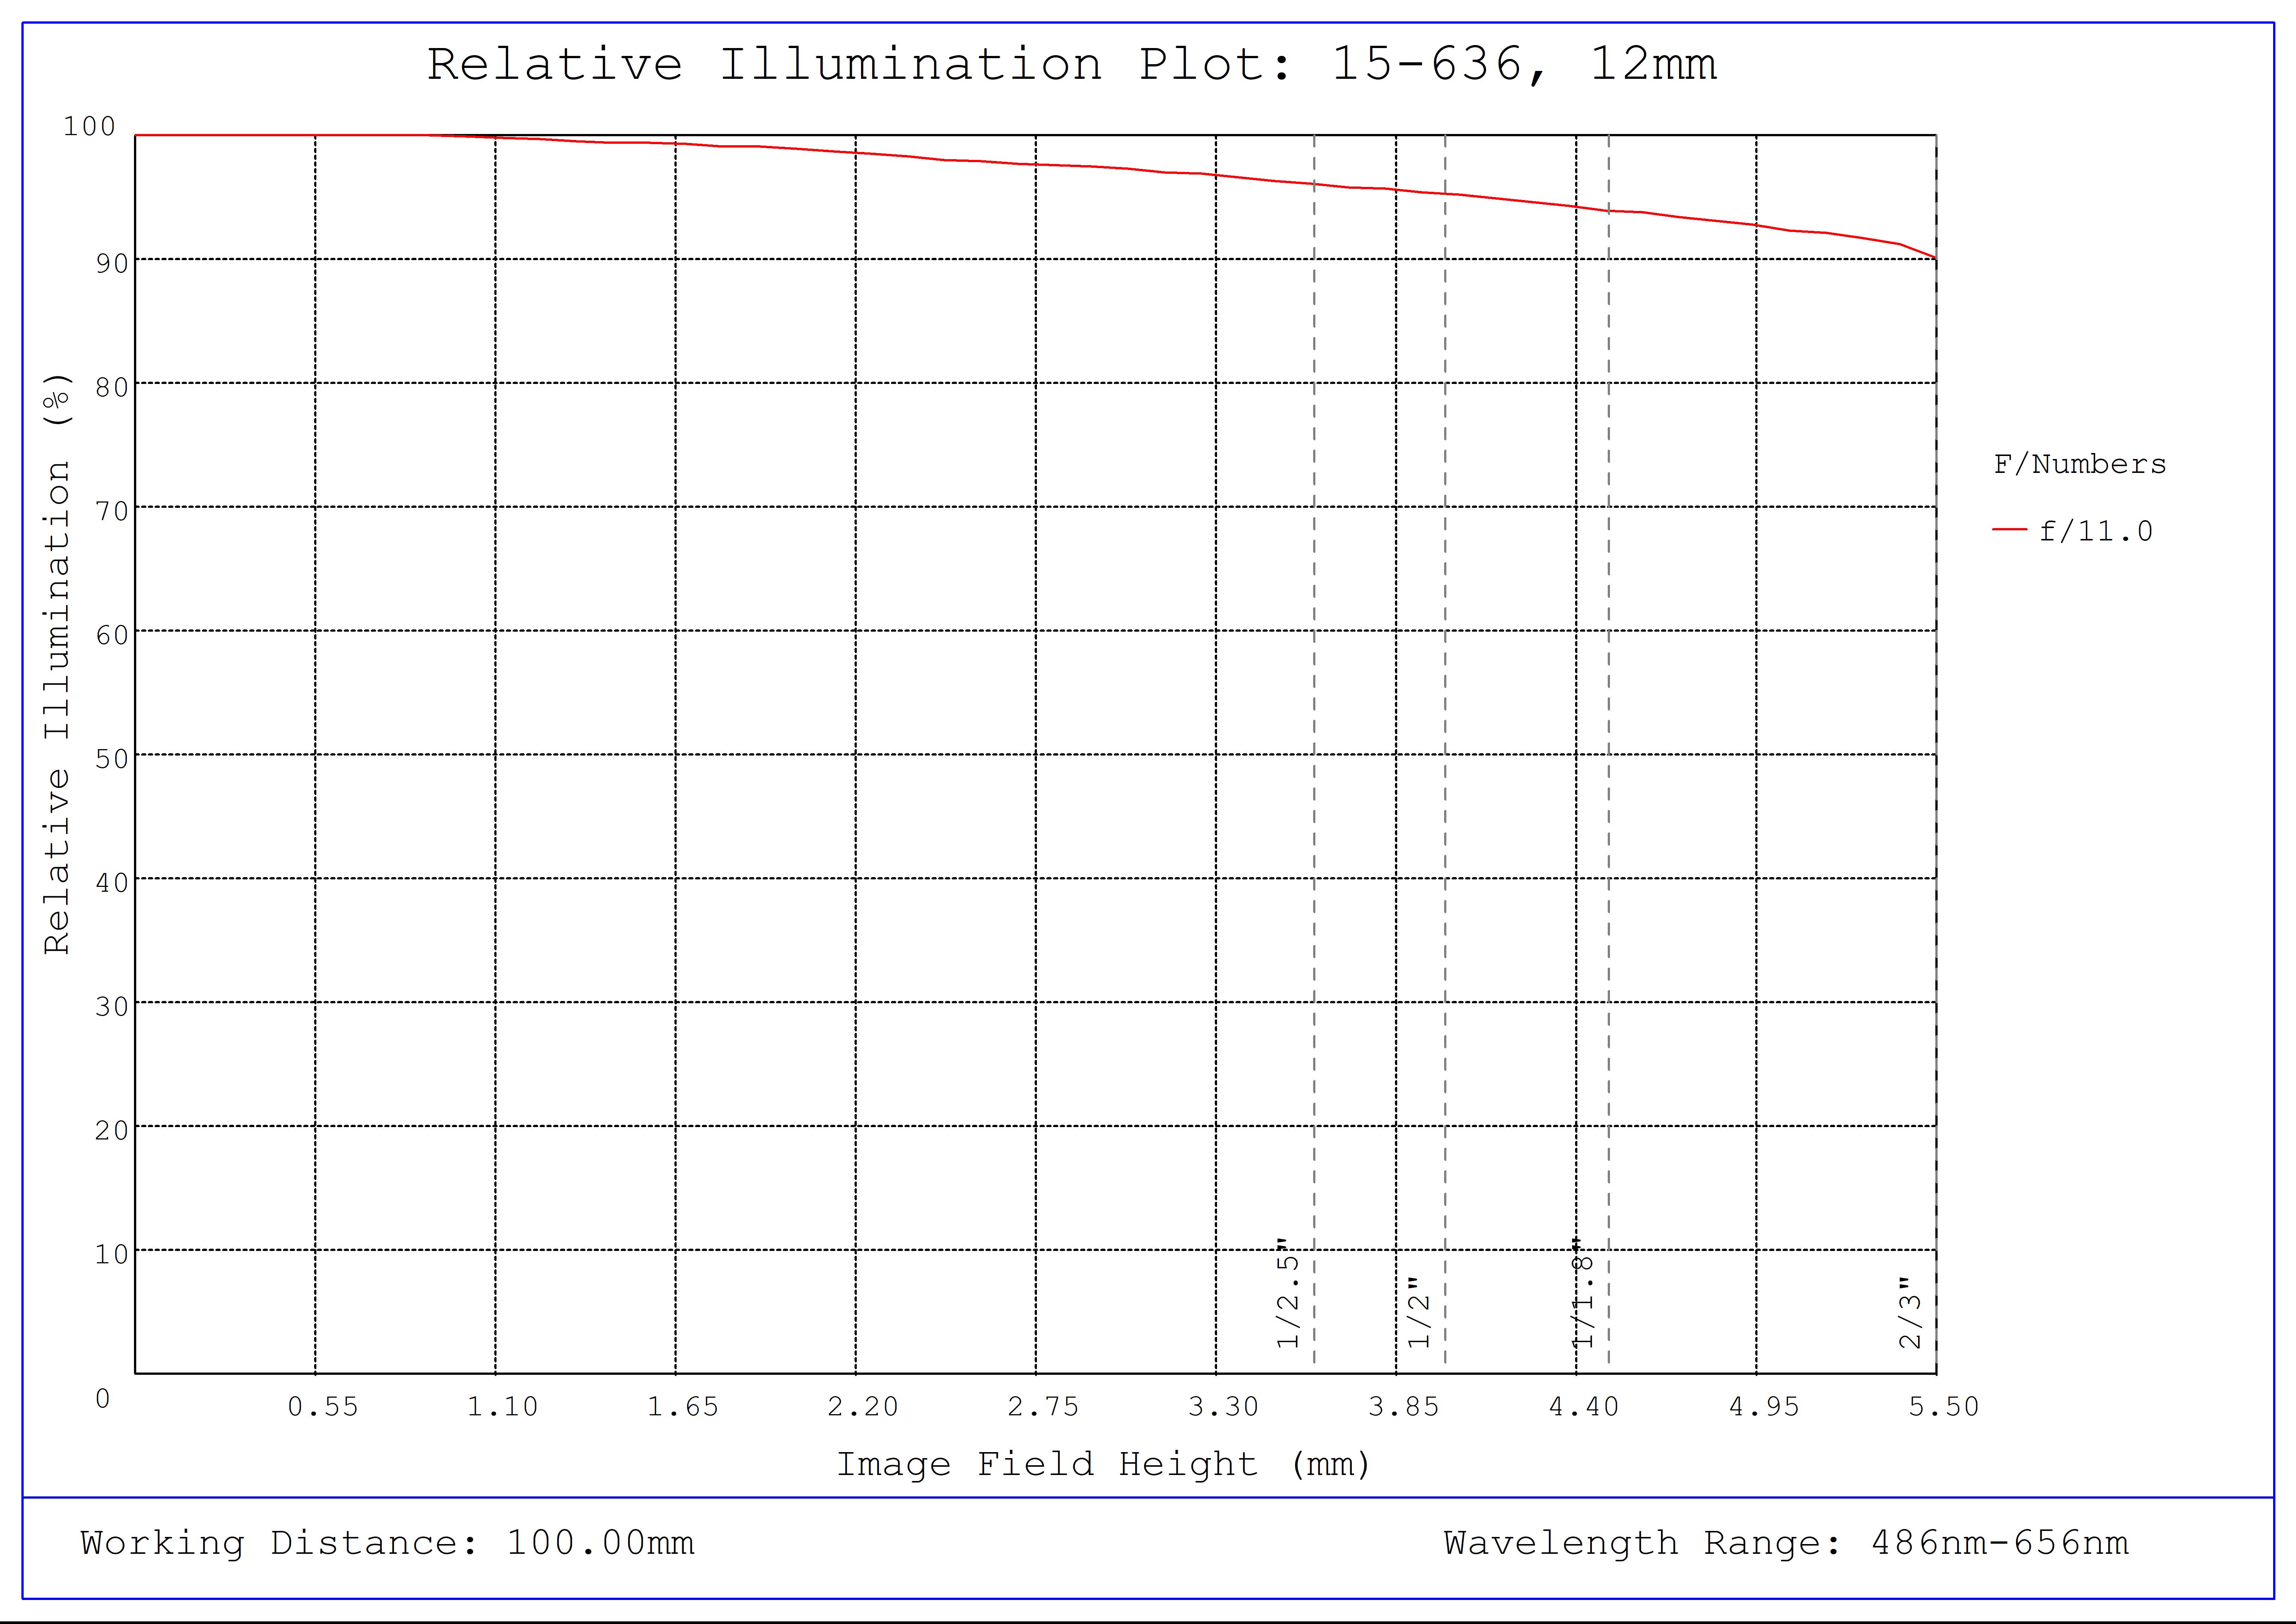 #15-636, 12mm, f/11 Cw Series Fixed Focal Length Lens, Relative Illumination Plot